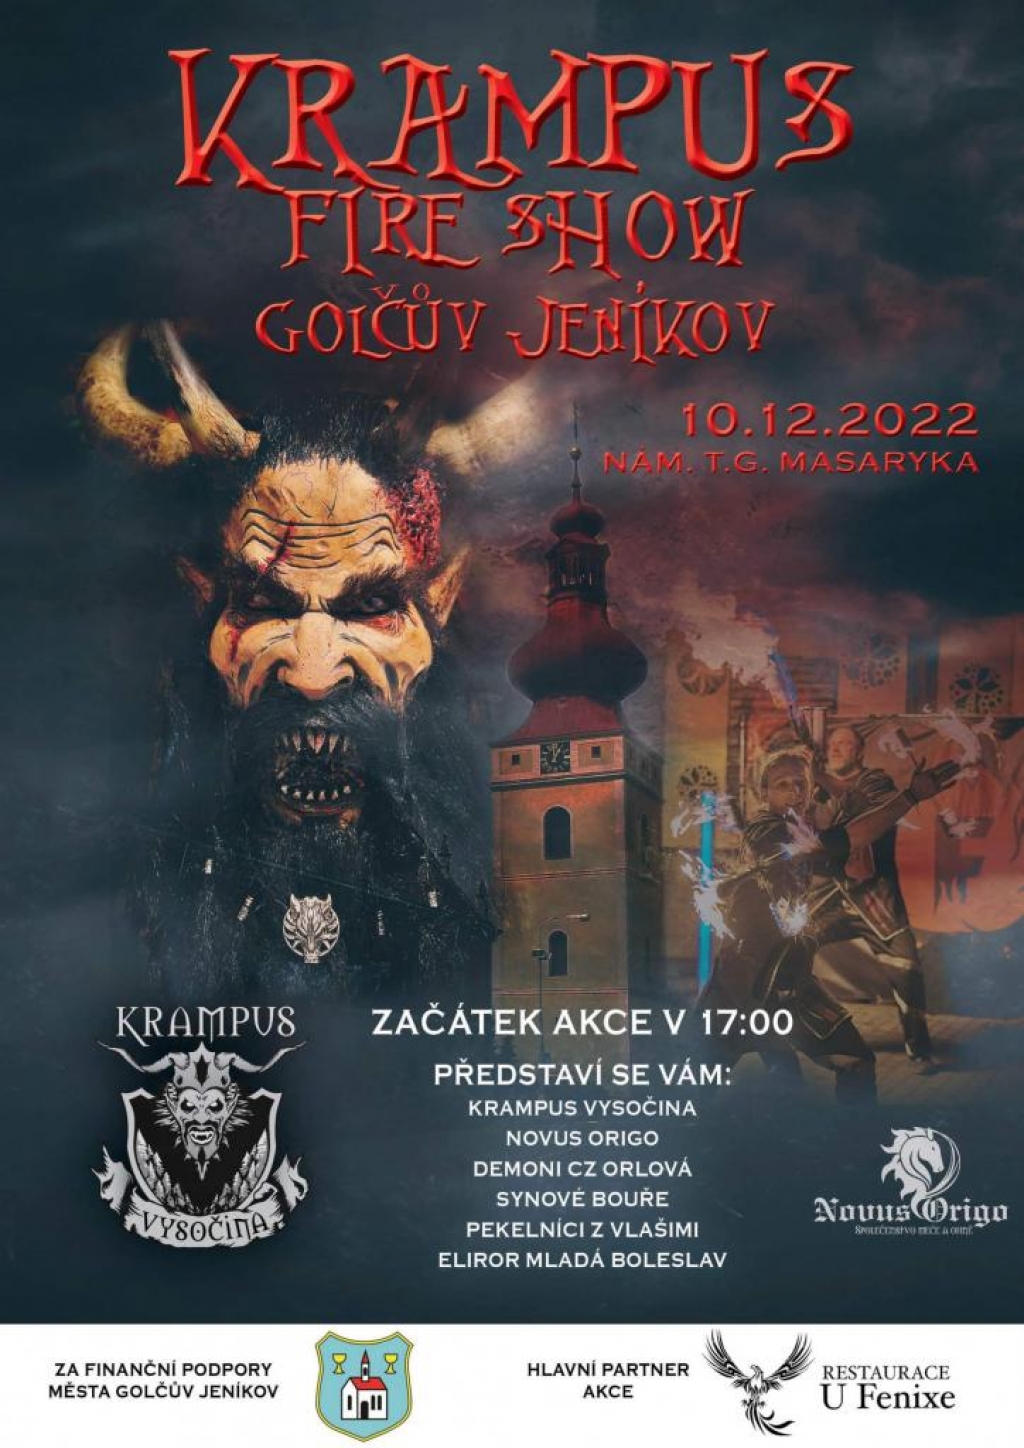 Krampus fire show 2022 Golčův Jeníkov